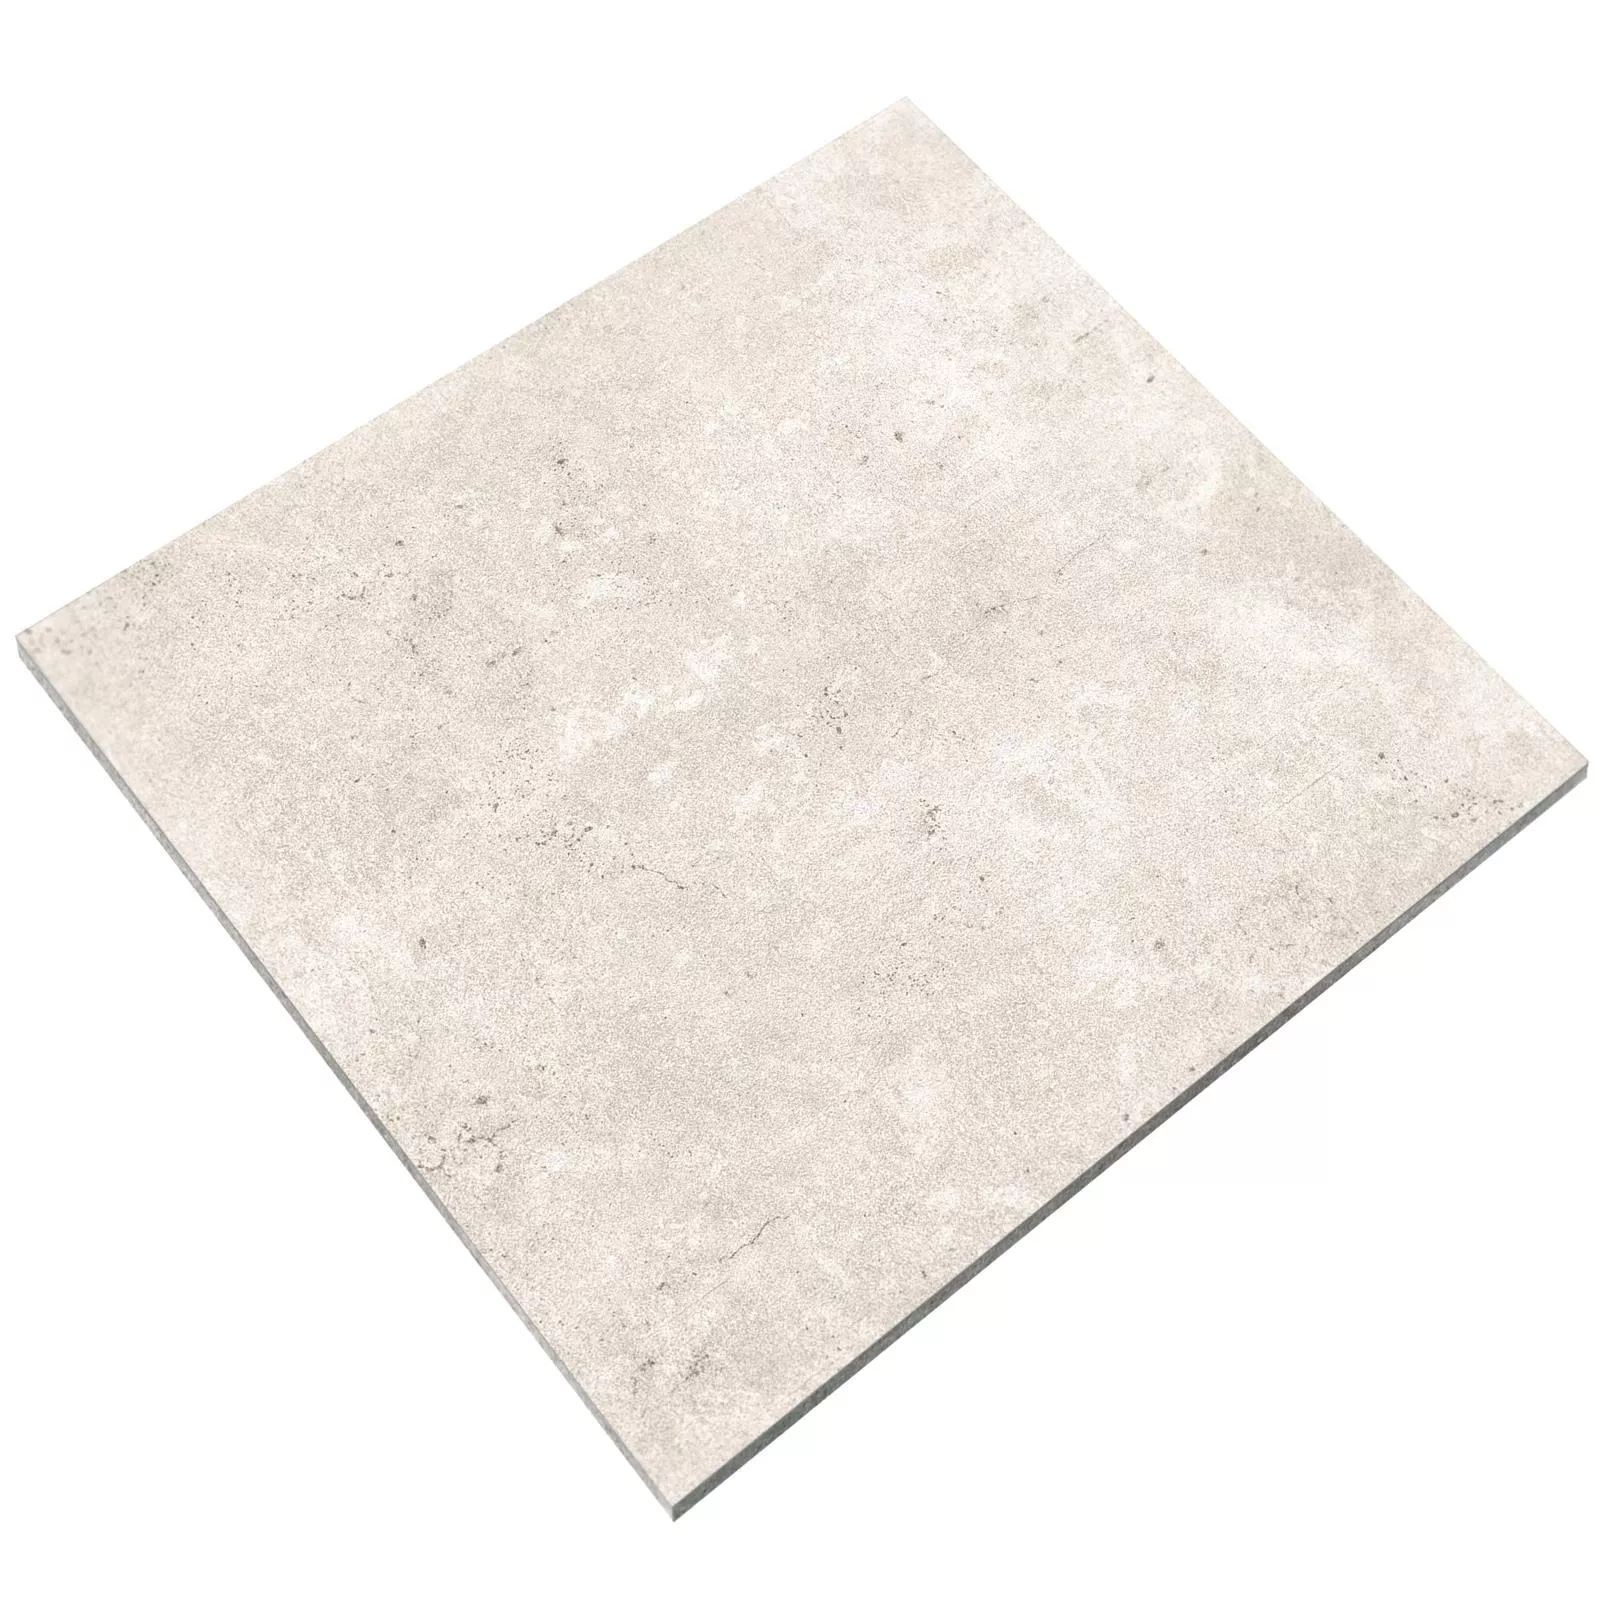 Sample Floor Tiles Jamaica Beton Optic Creme Blanc 60x60cm